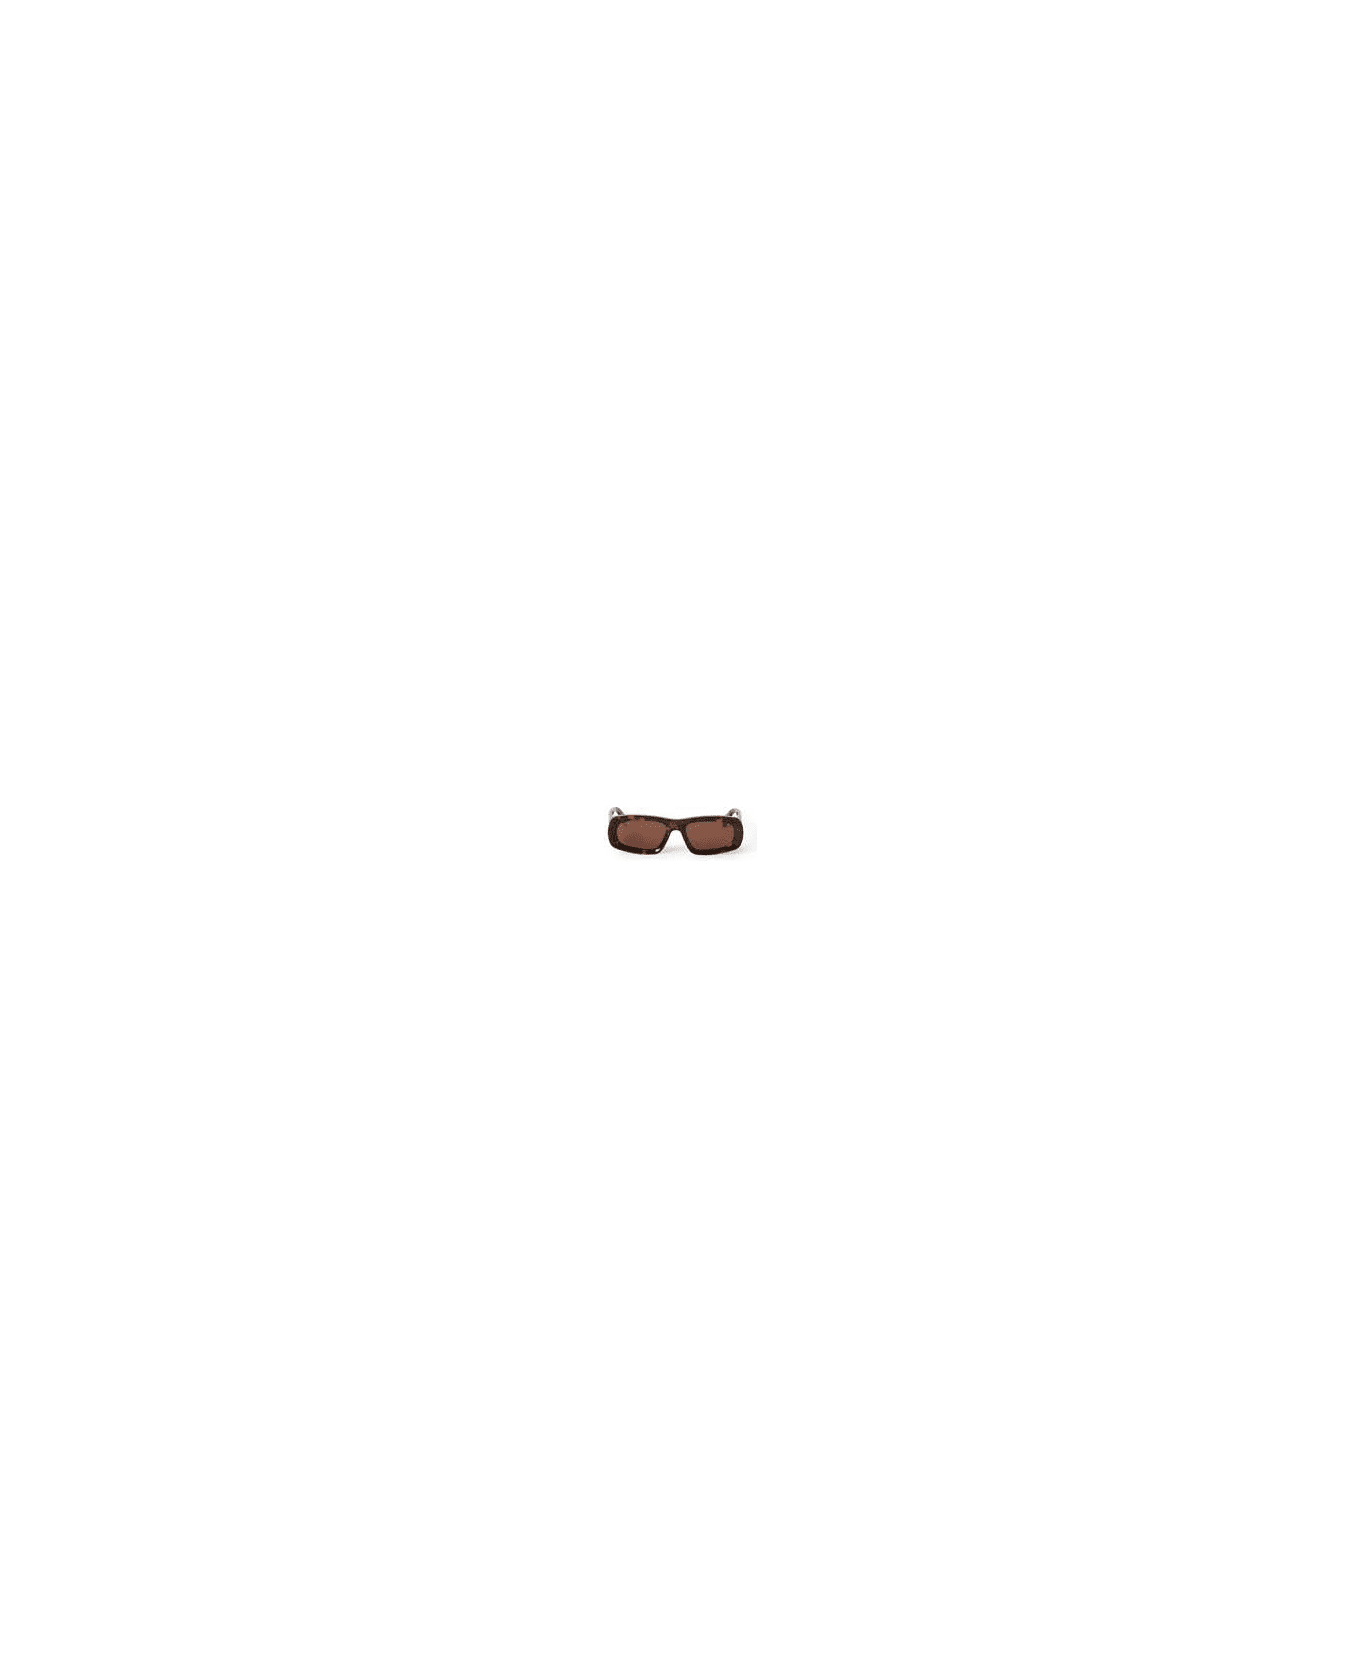 Off-White AUSTIN SUNGLASSES Sunglasses - Havana サングラス